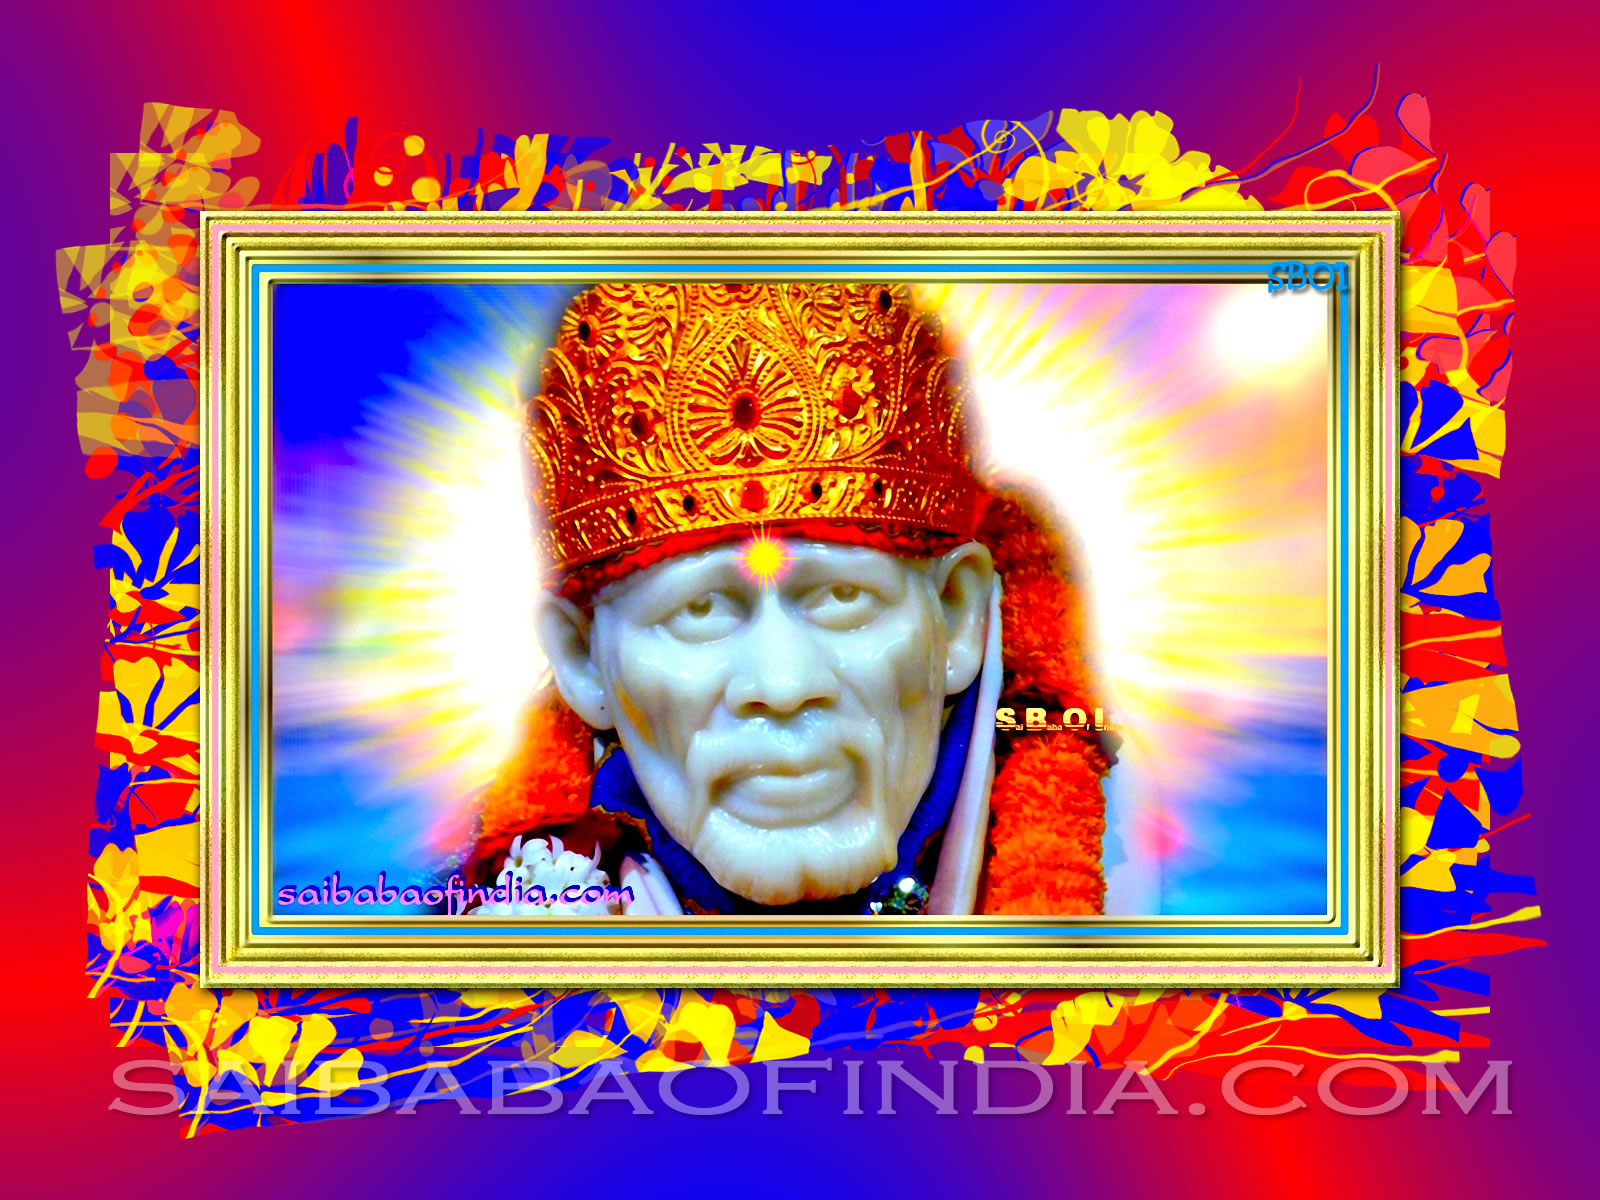 Shirdi Sai Baba Exclusive WallPapers - free download ...